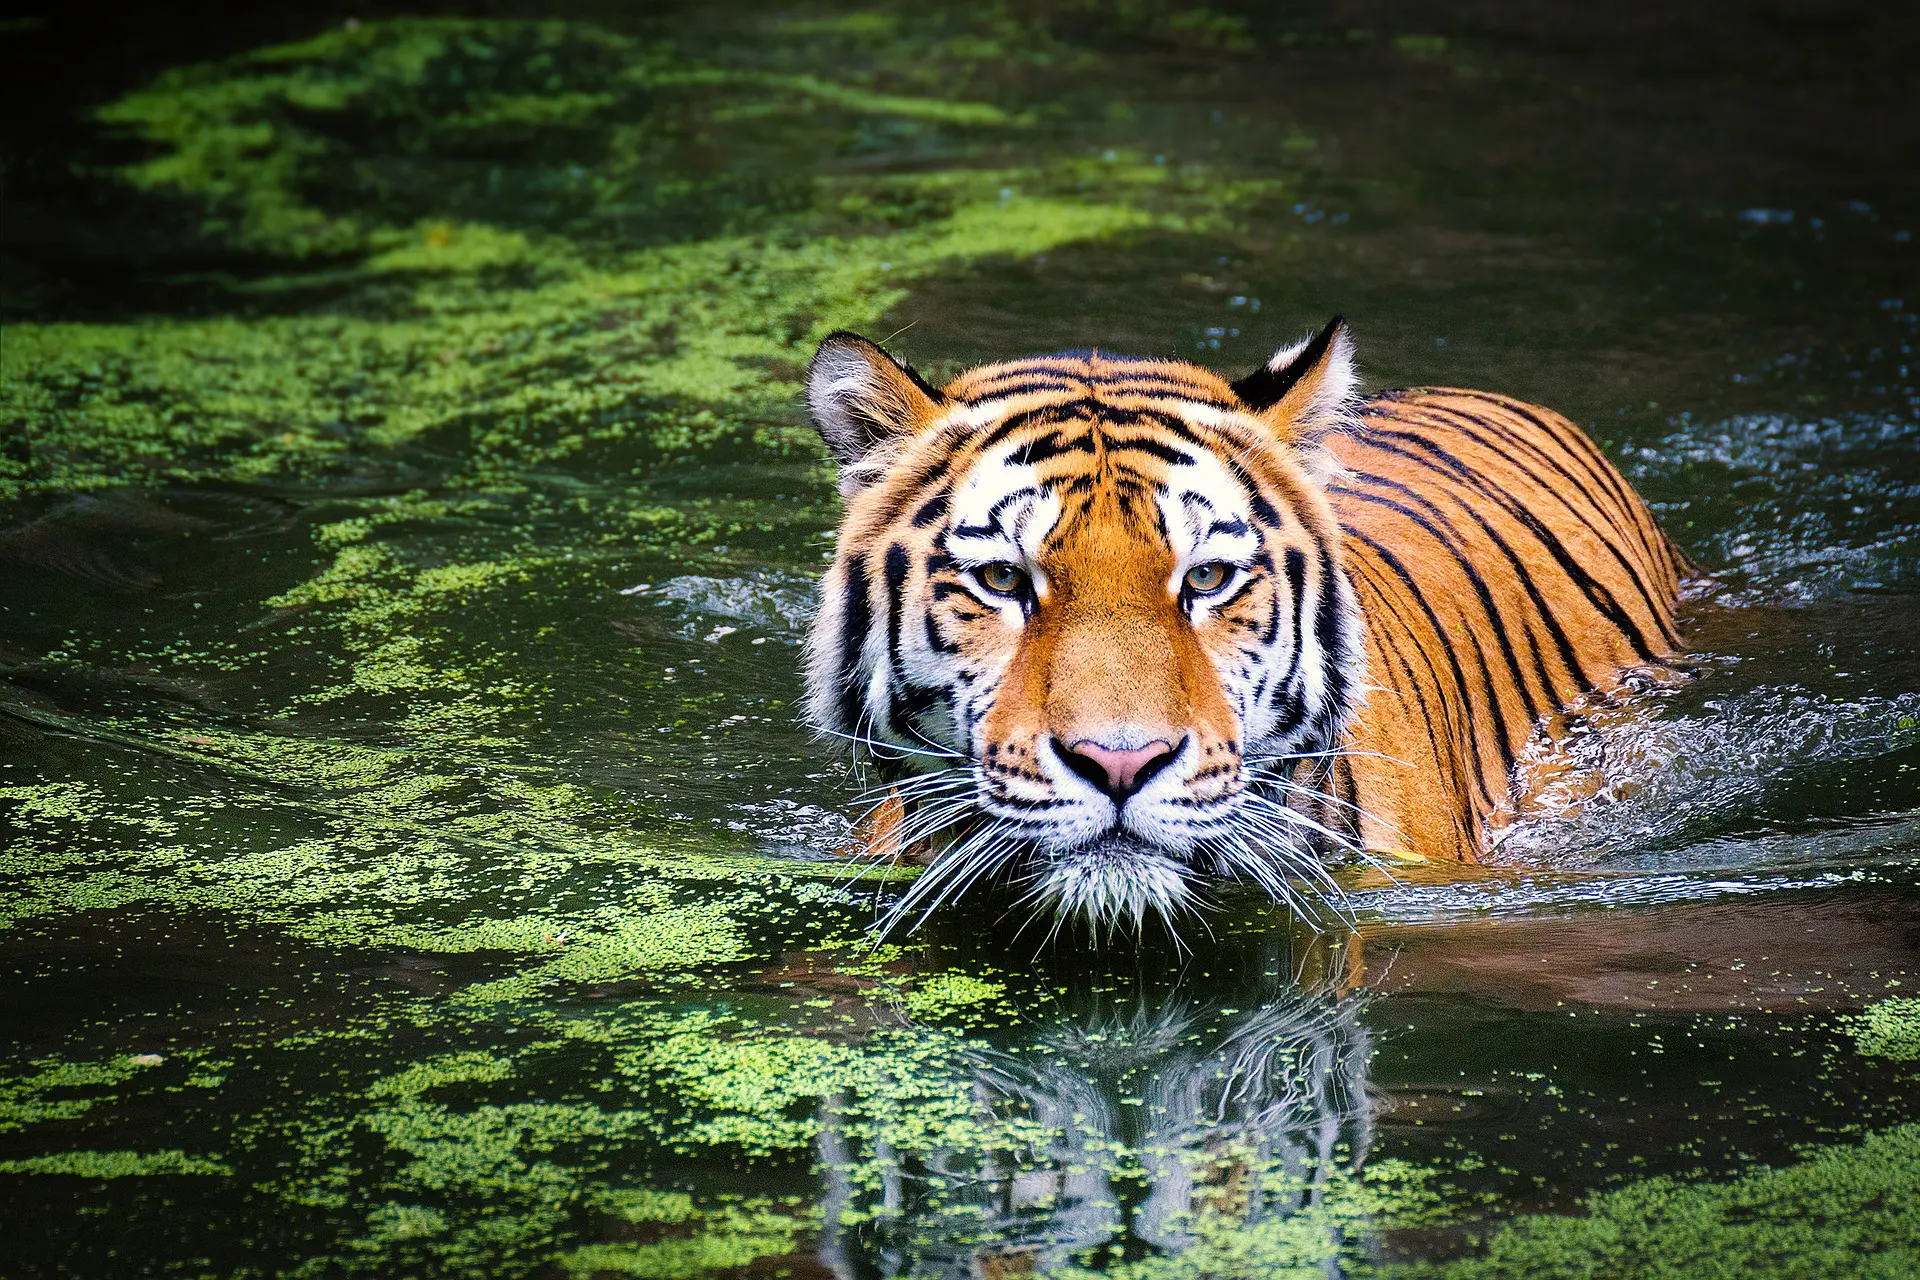 Gorewada zoo tiger in their natural habitat